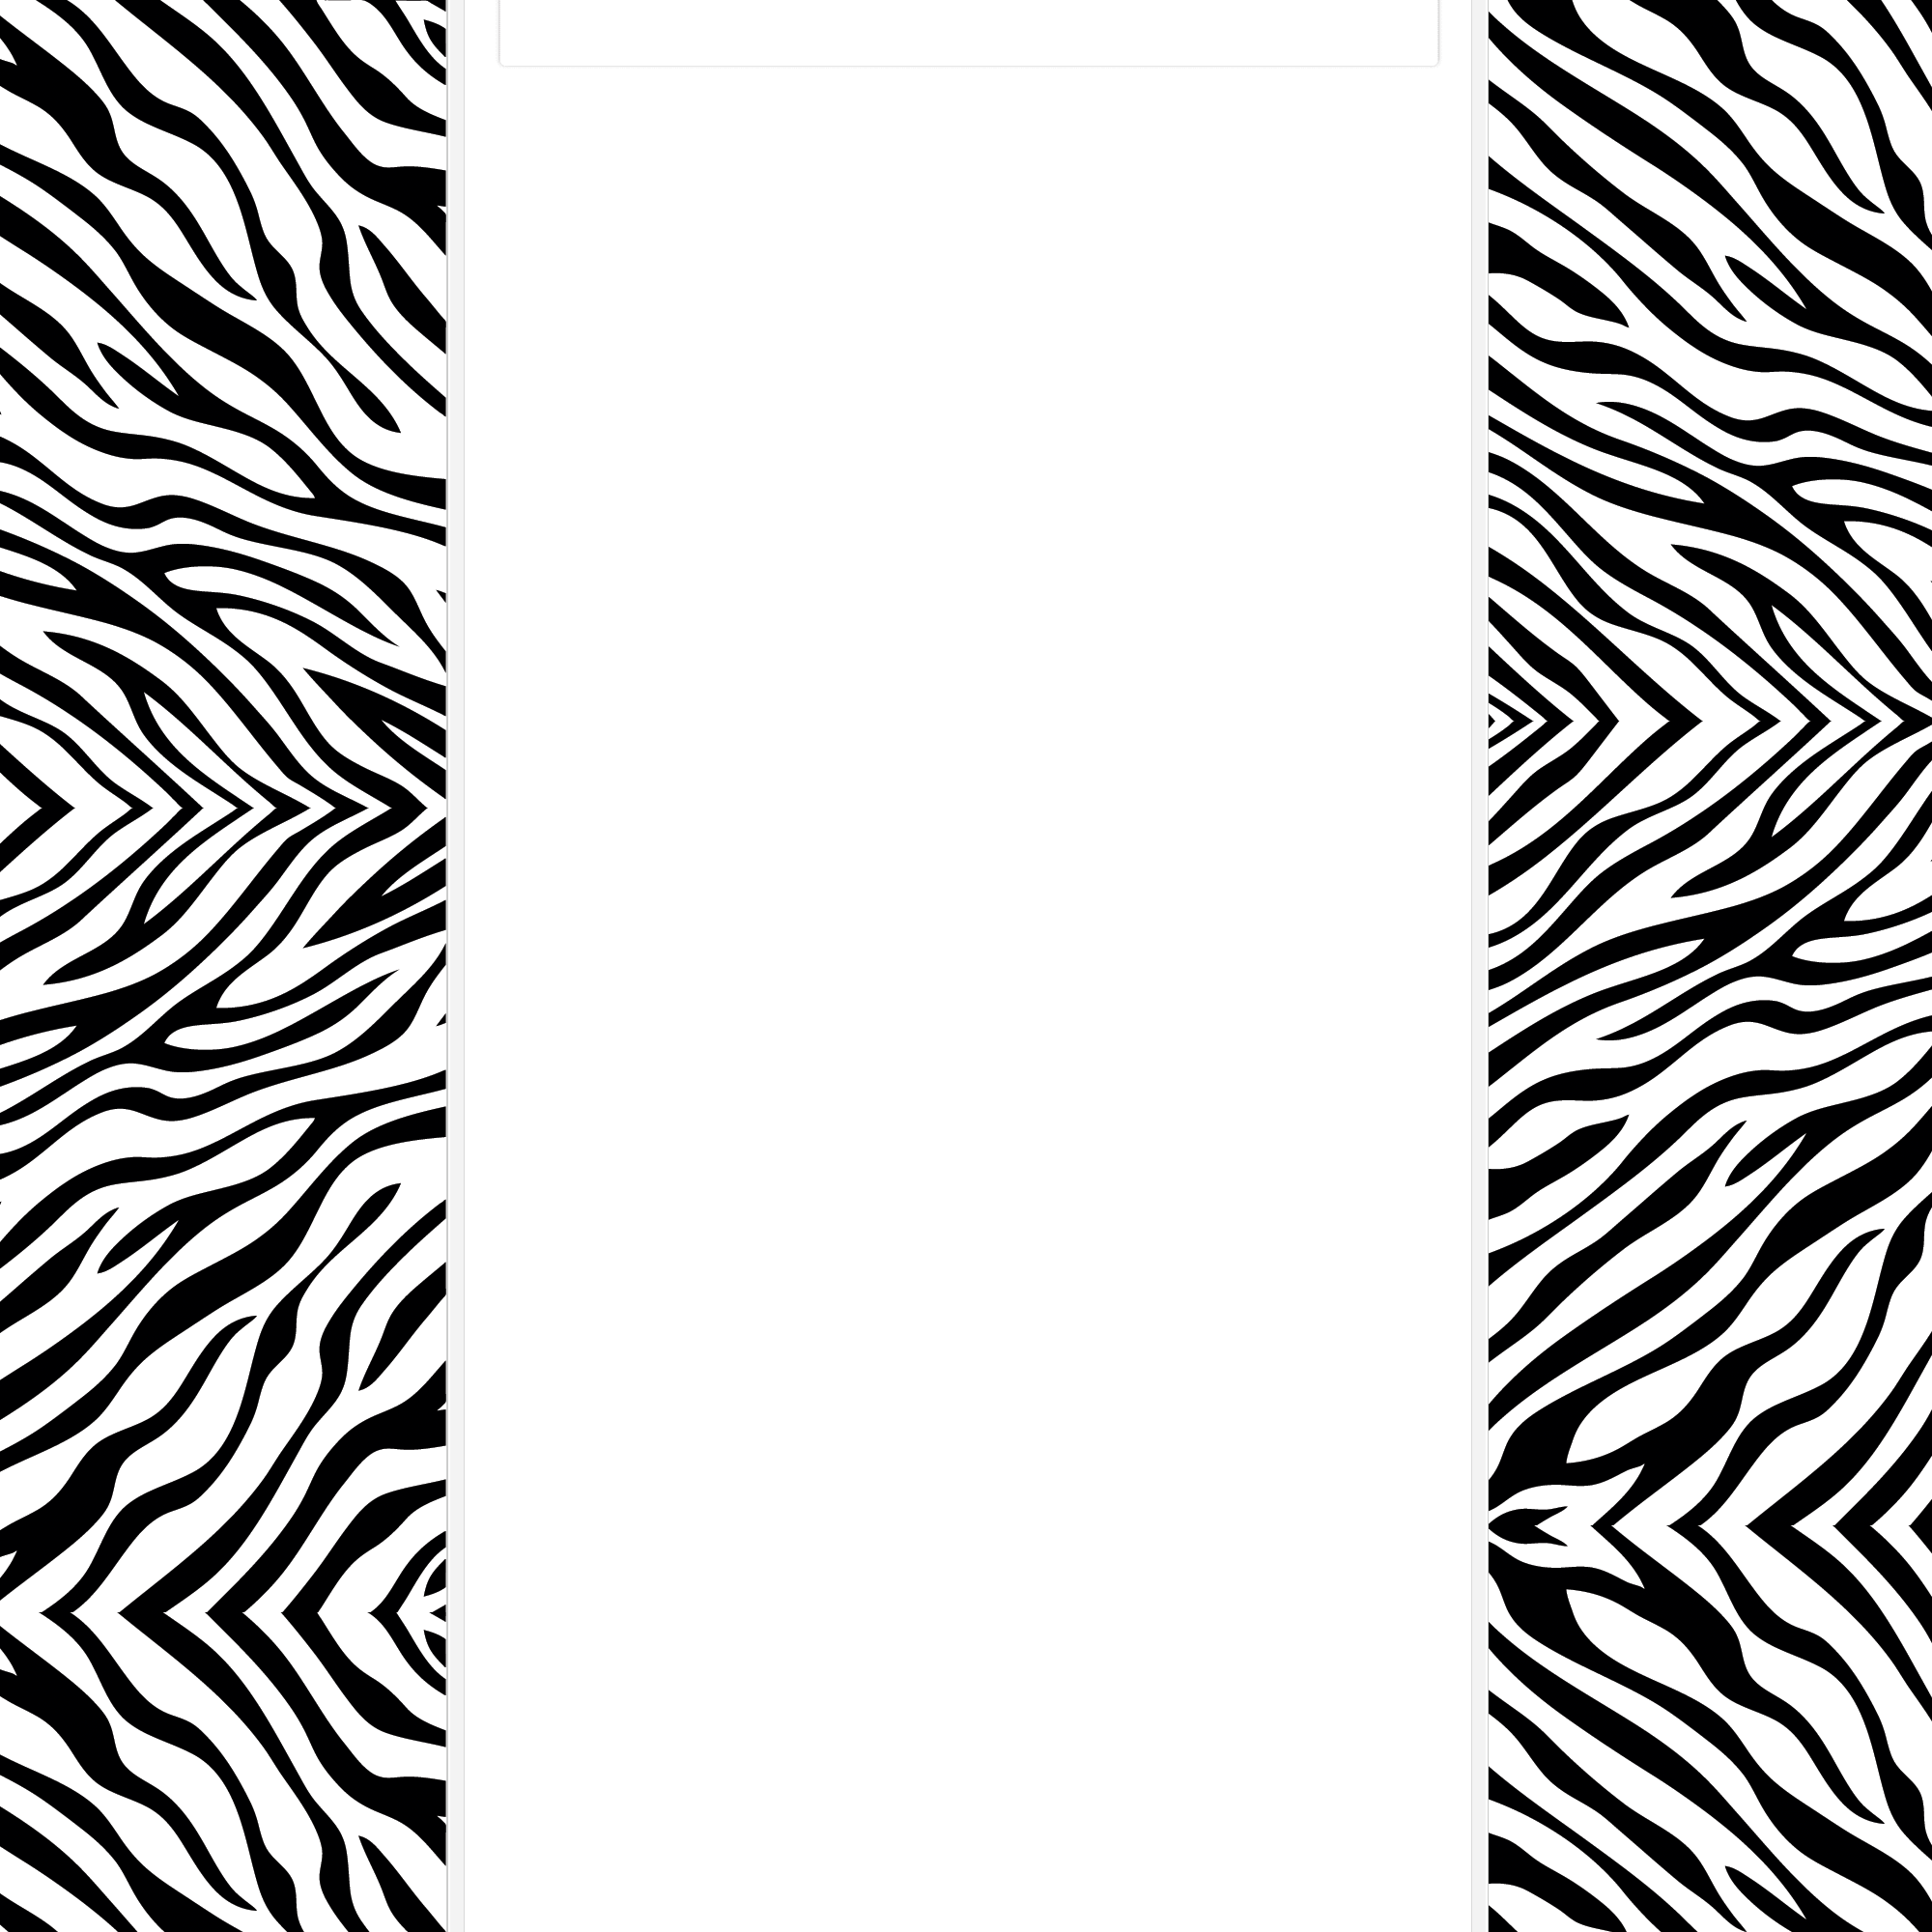 Zebra Print Background Microsoft Word - Clipart library